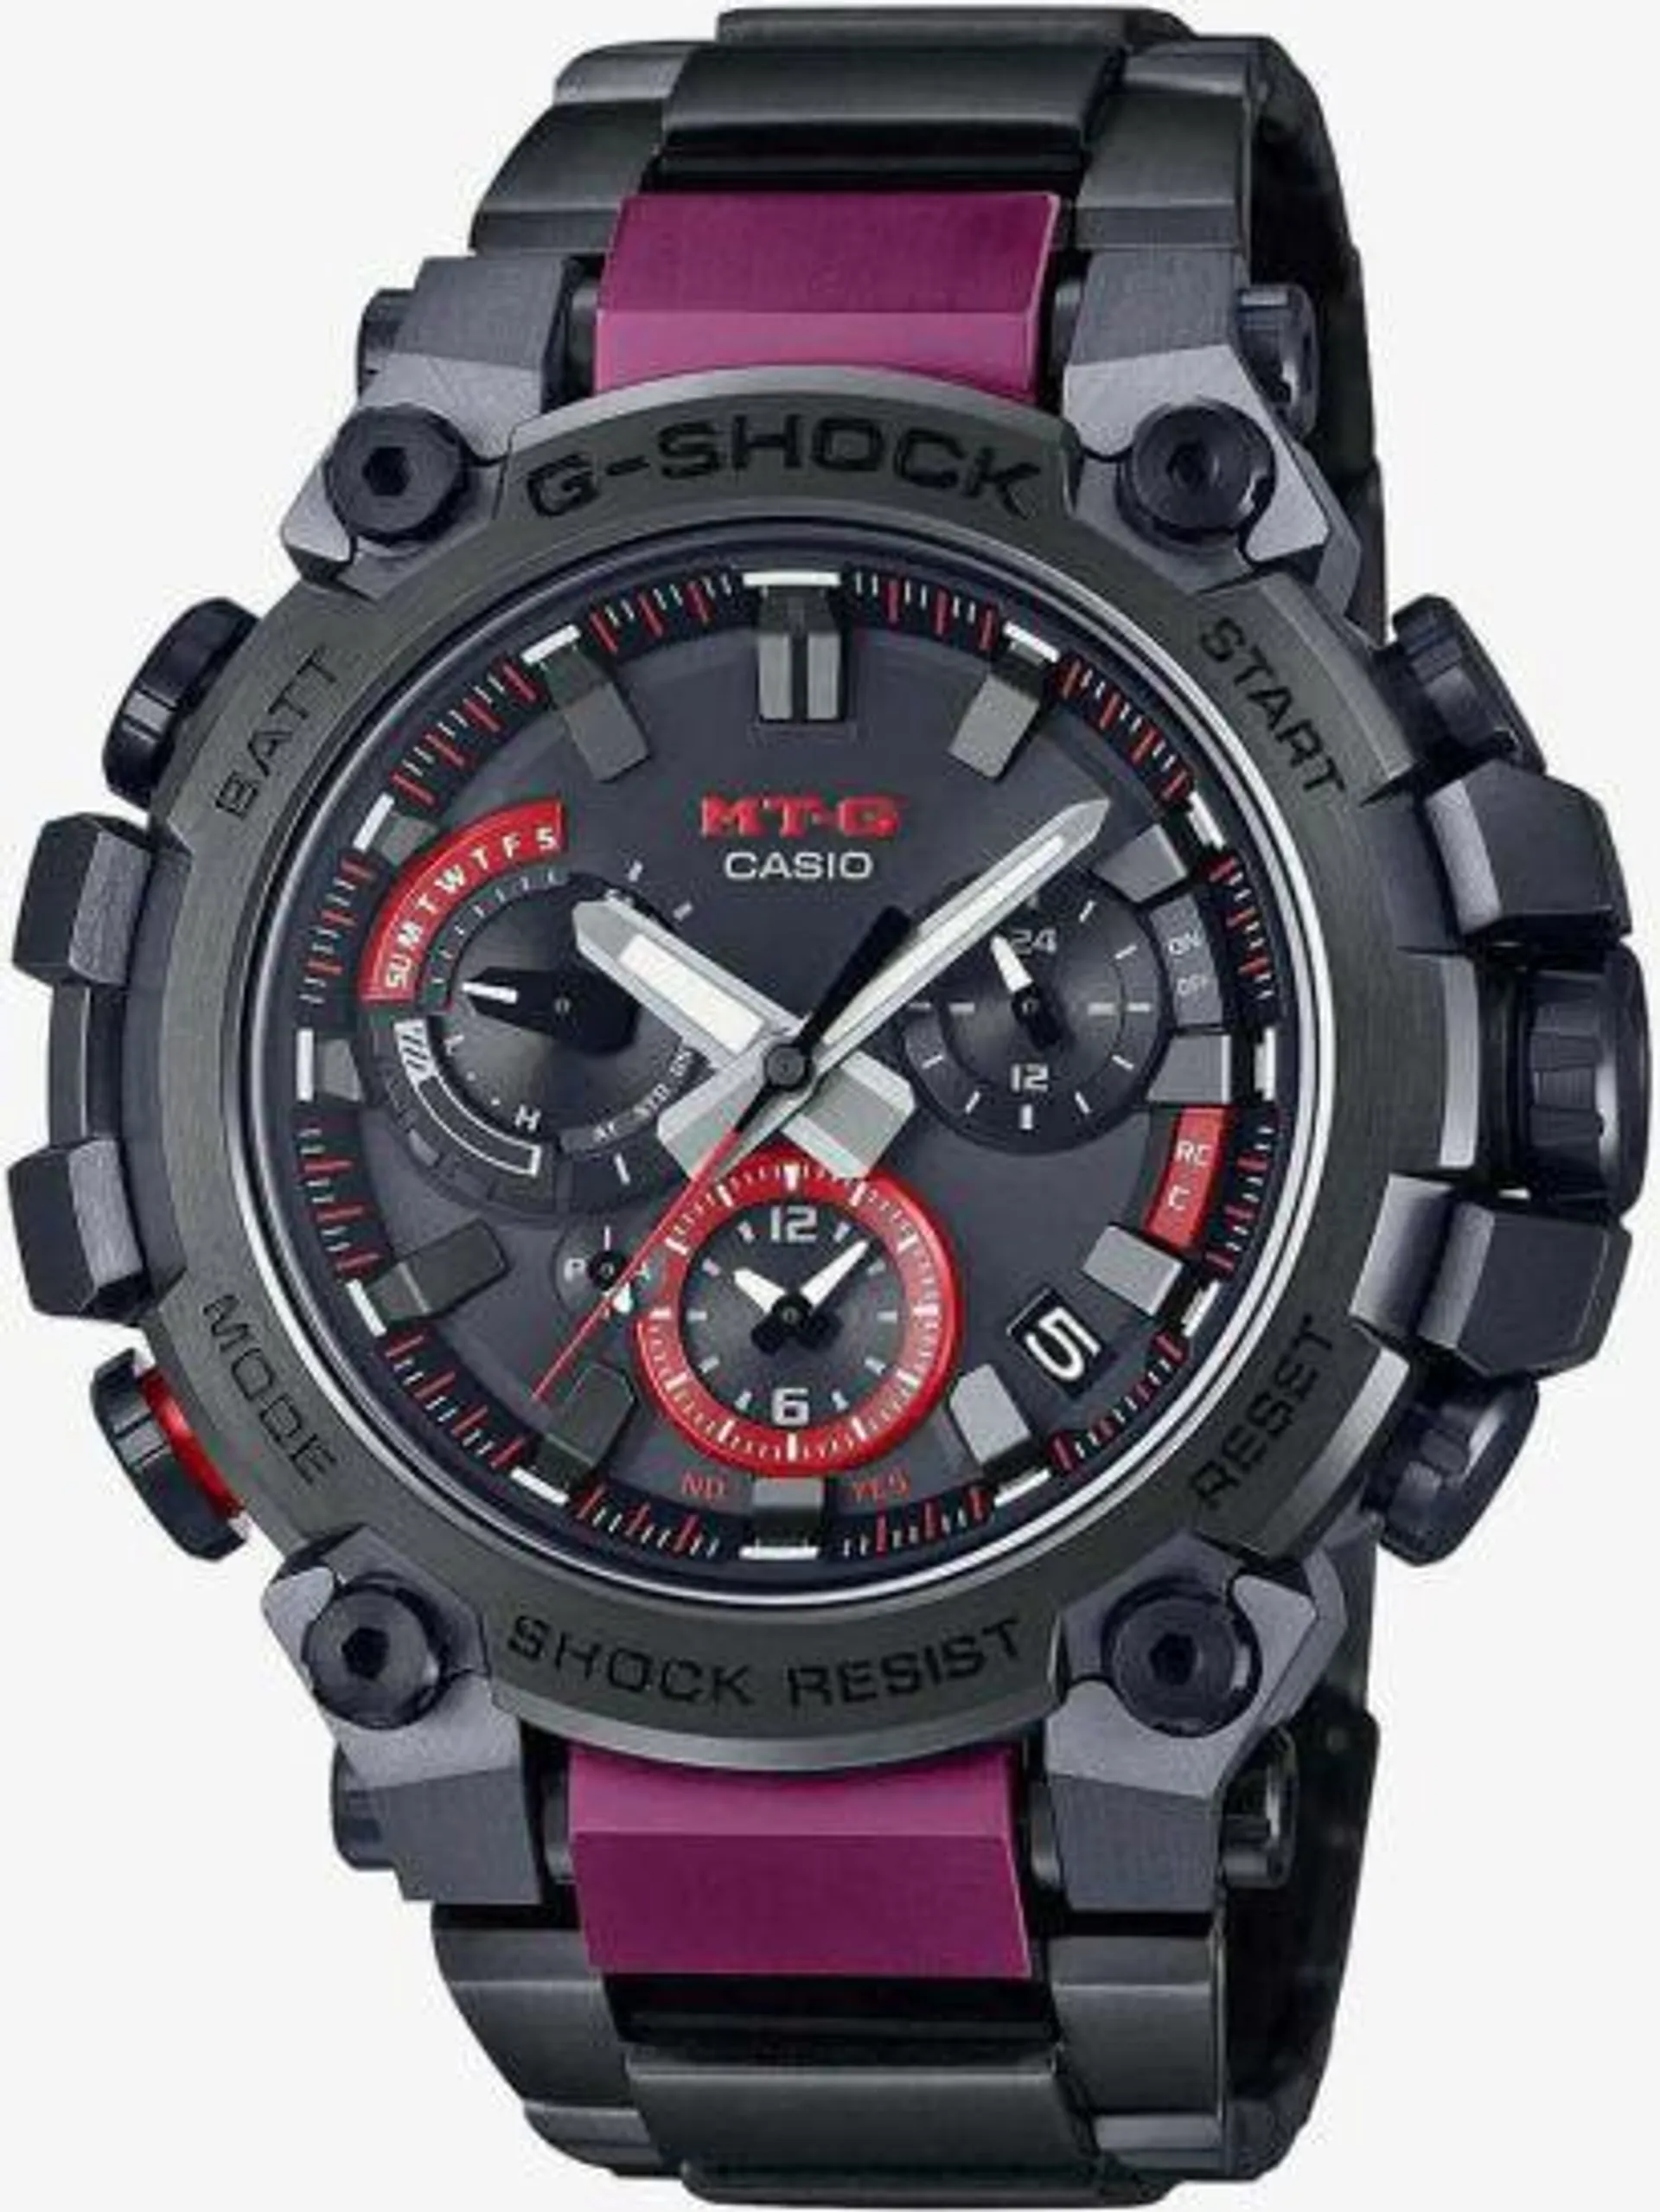 G-Shock MTG-B3000 Series Watch